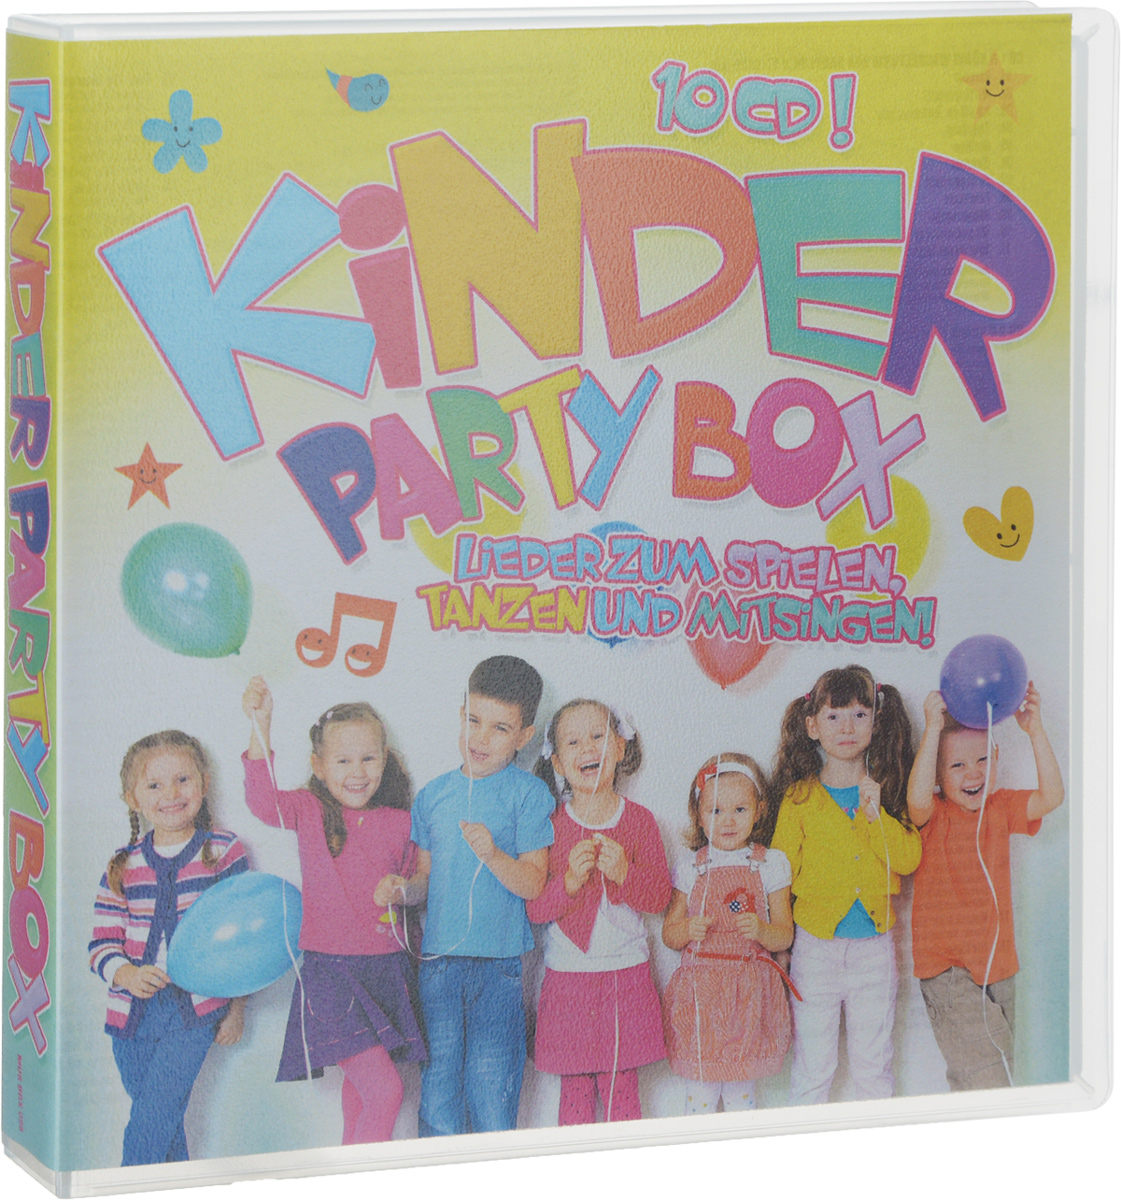 Kinder Party Box (10 CD)